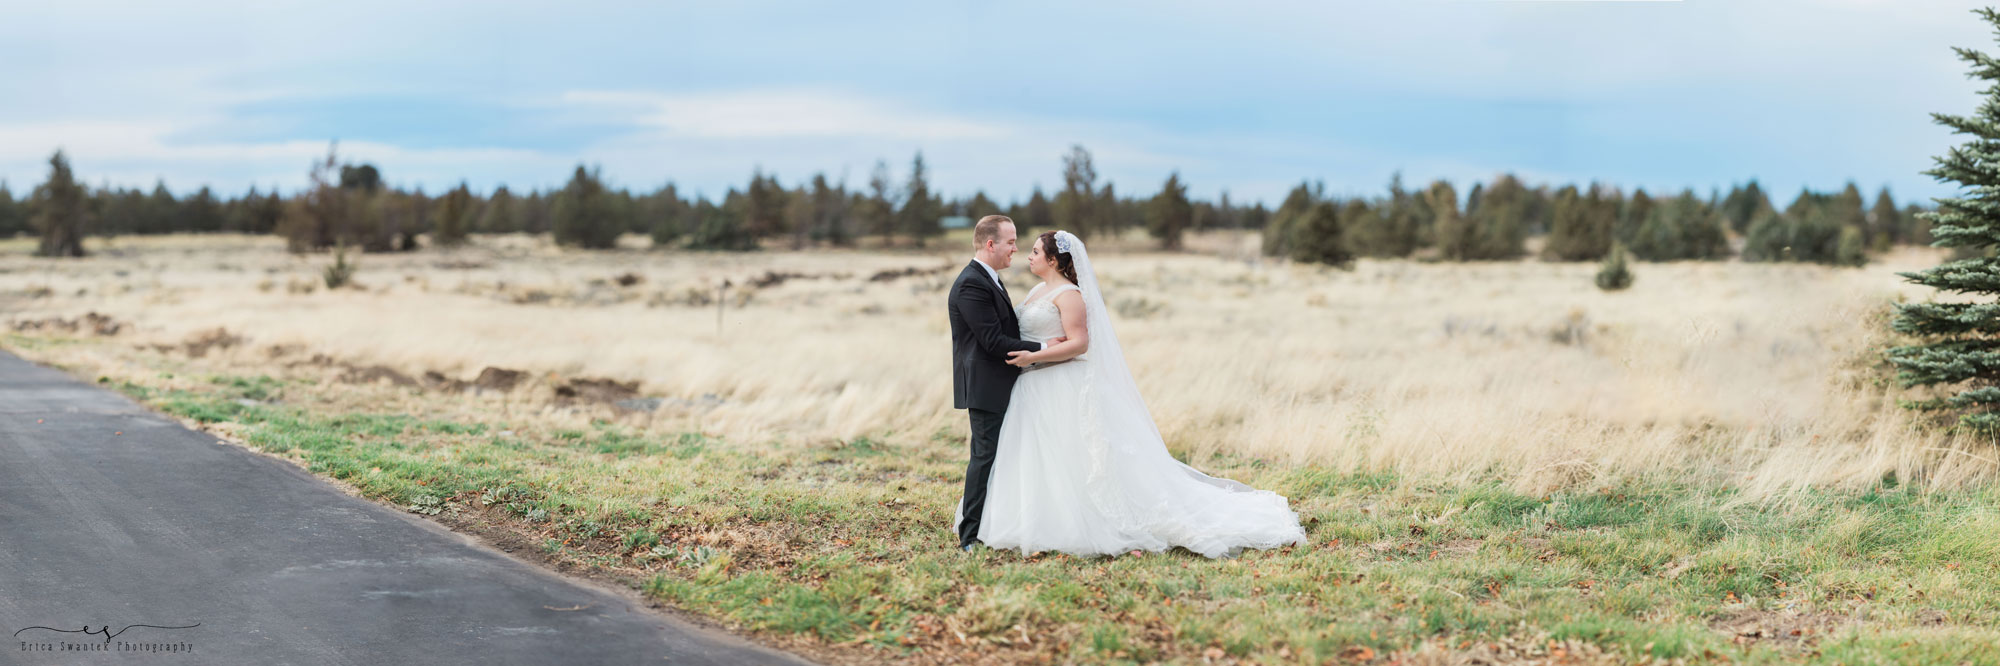 Outdoor Oregon wedding photographer Erica Swantek Photography captures a winter woodland wedding in Bend. 